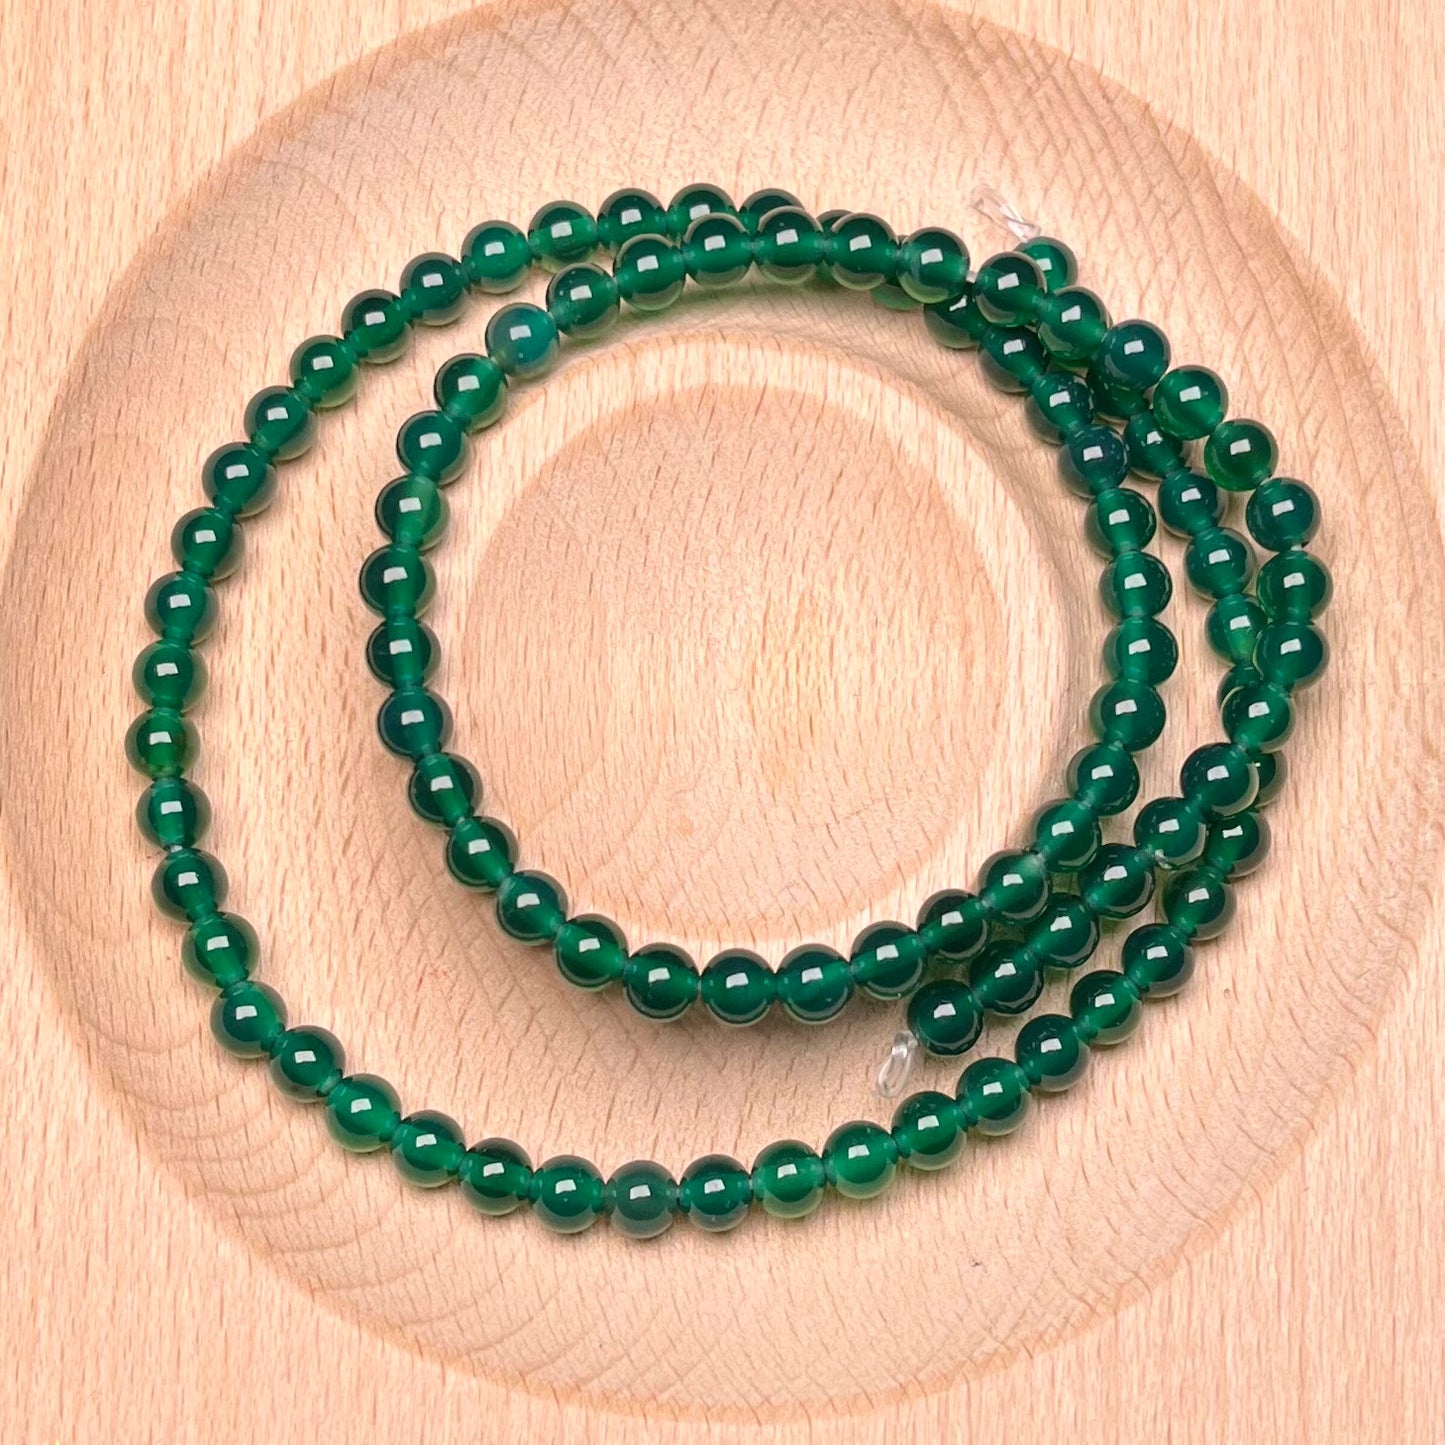 Green agate bead strand 4mm 1pc